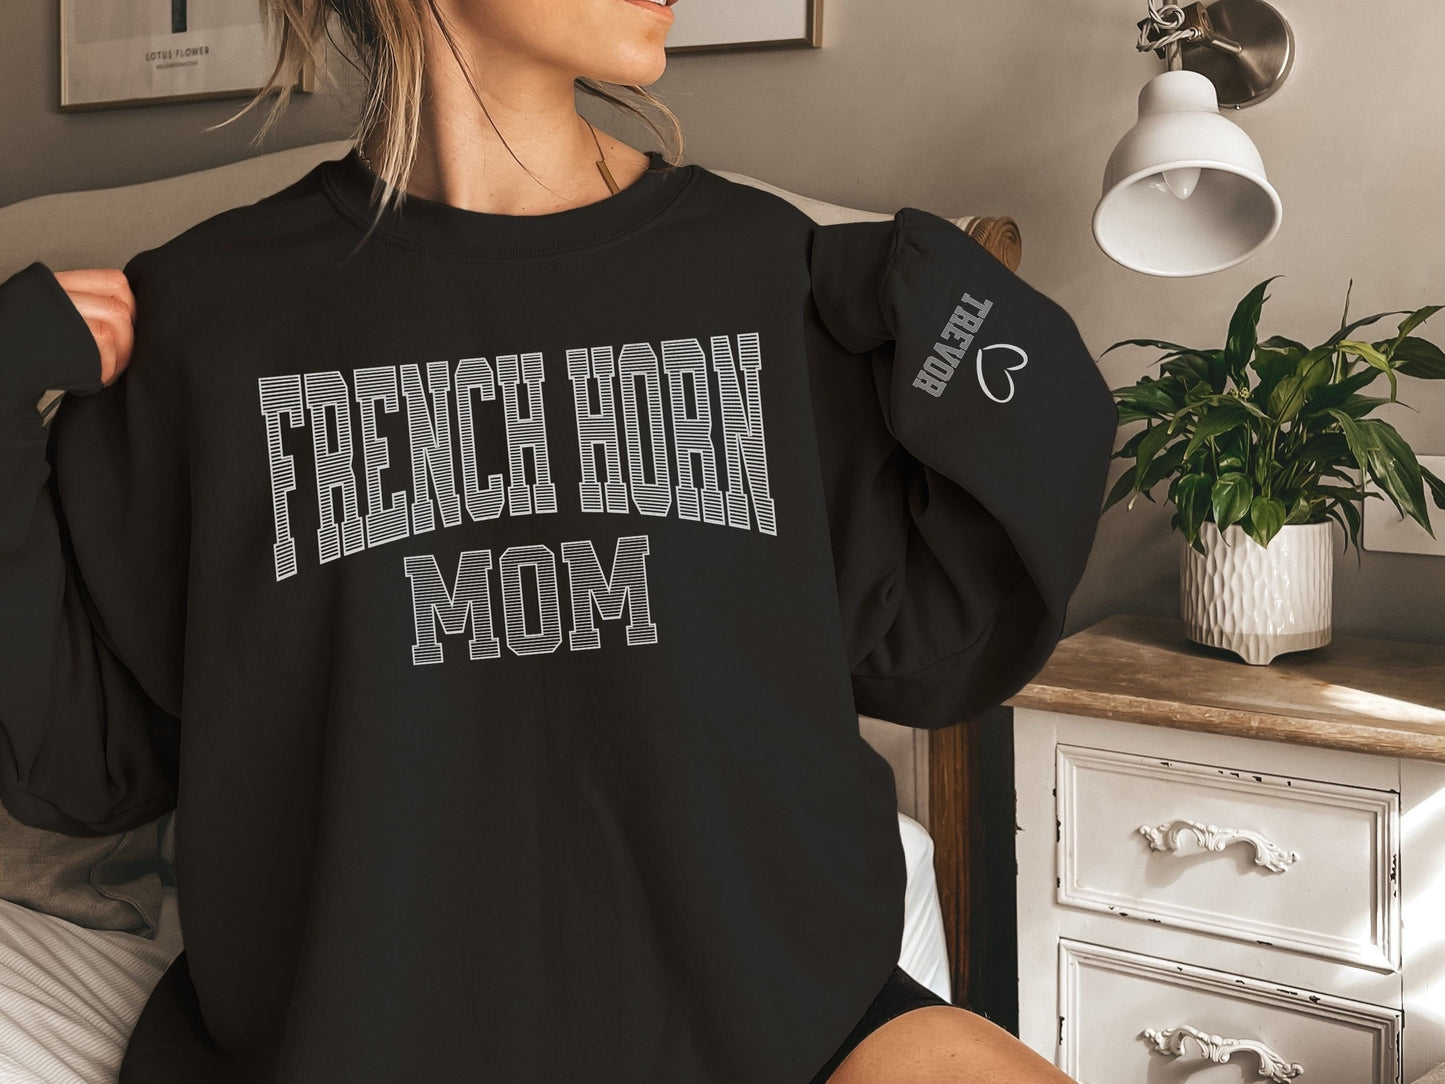 French Horn Mom Sweatshirt with Custom Sleeve Design